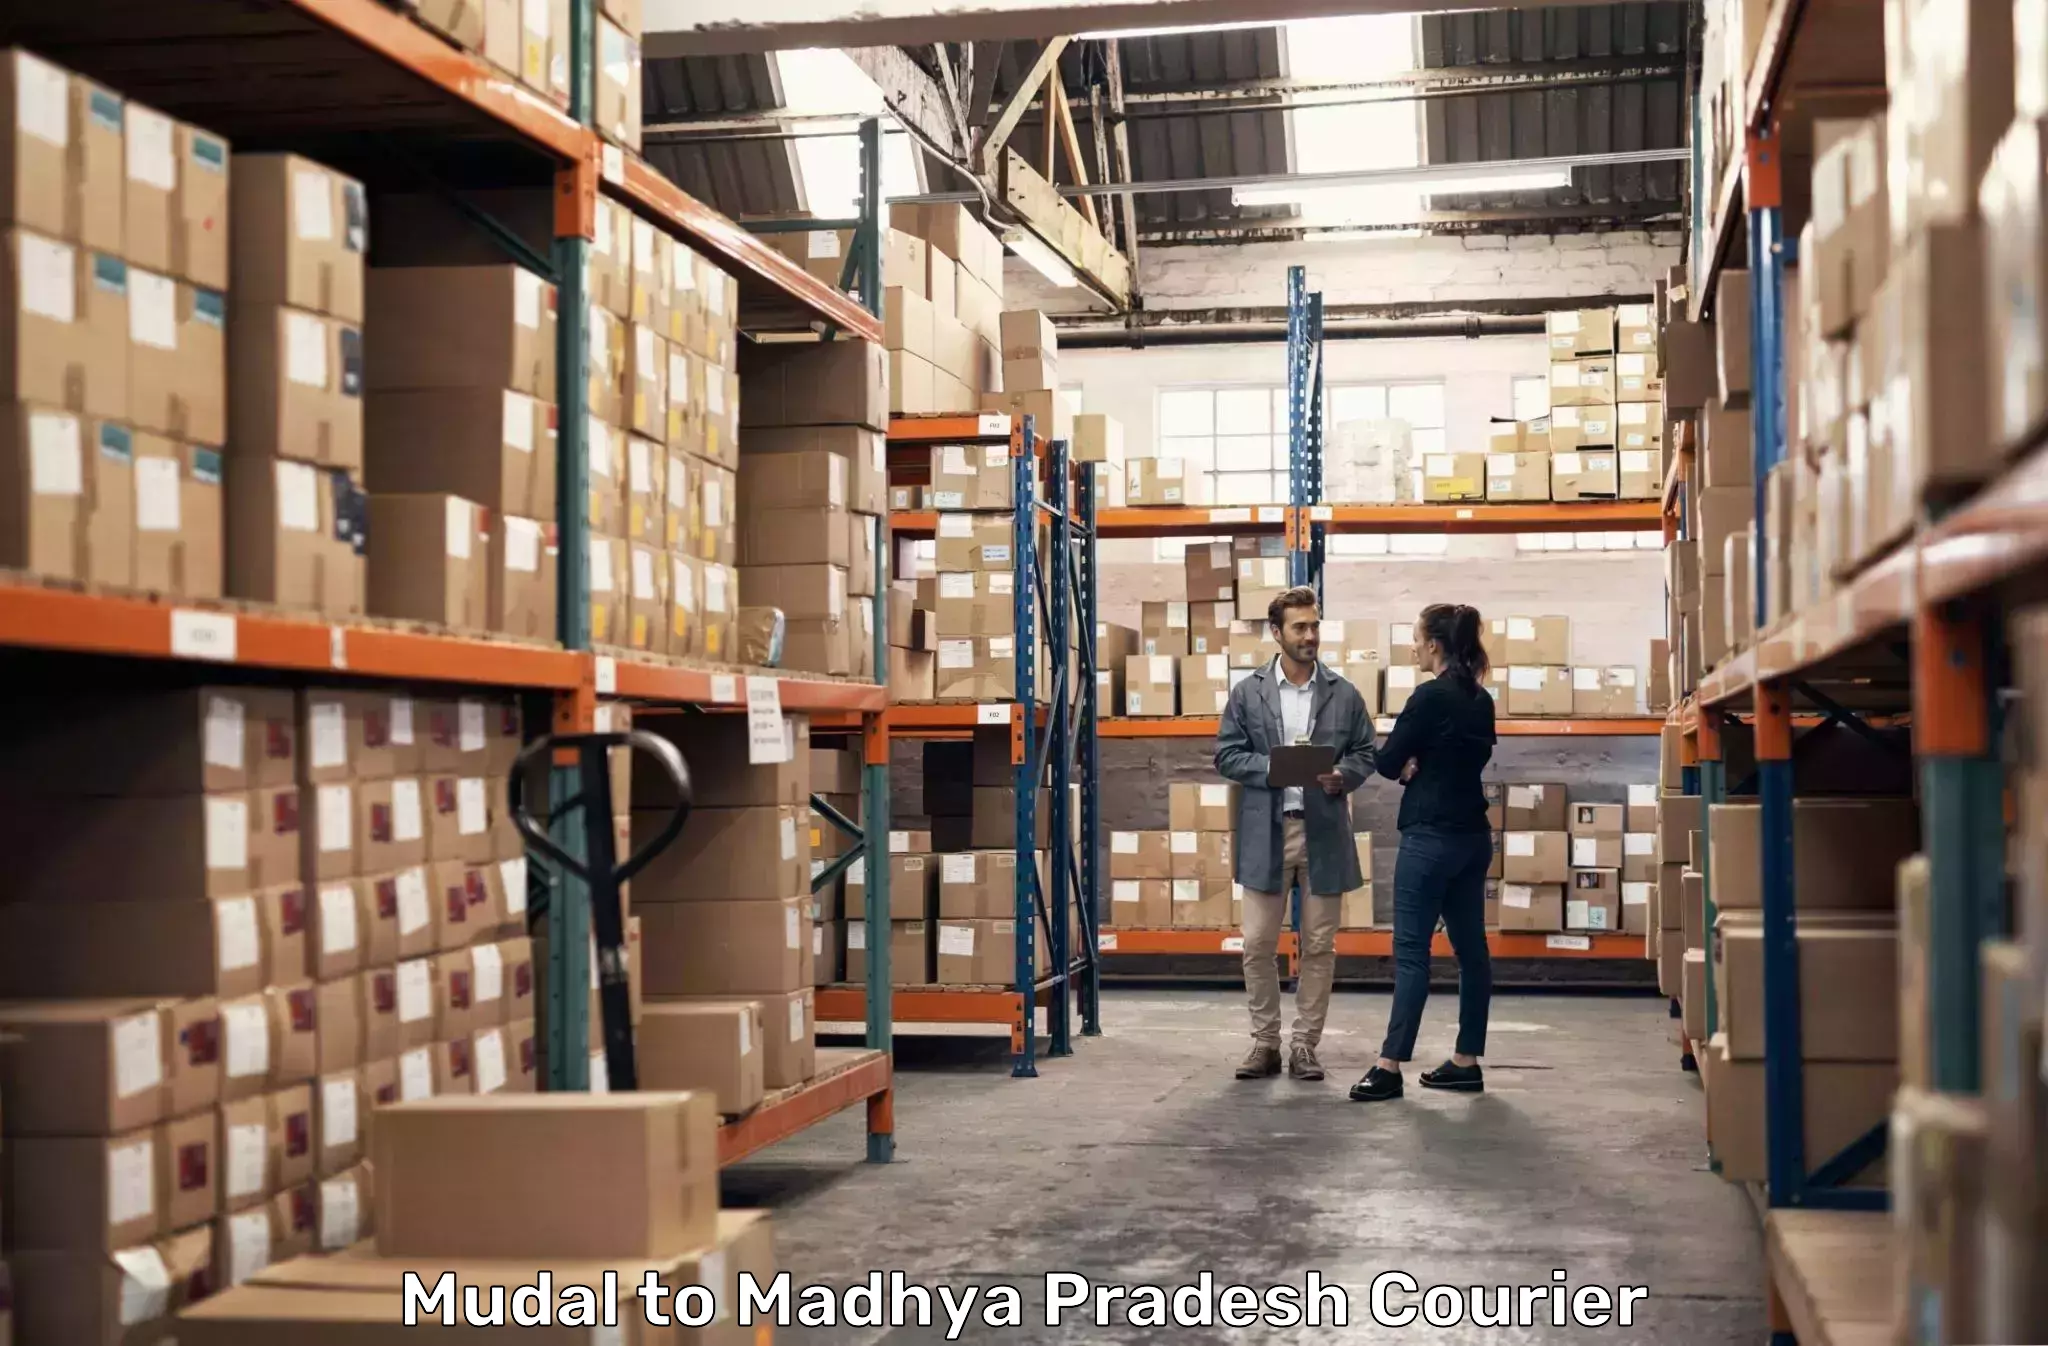 Global logistics network Mudal to Chandla